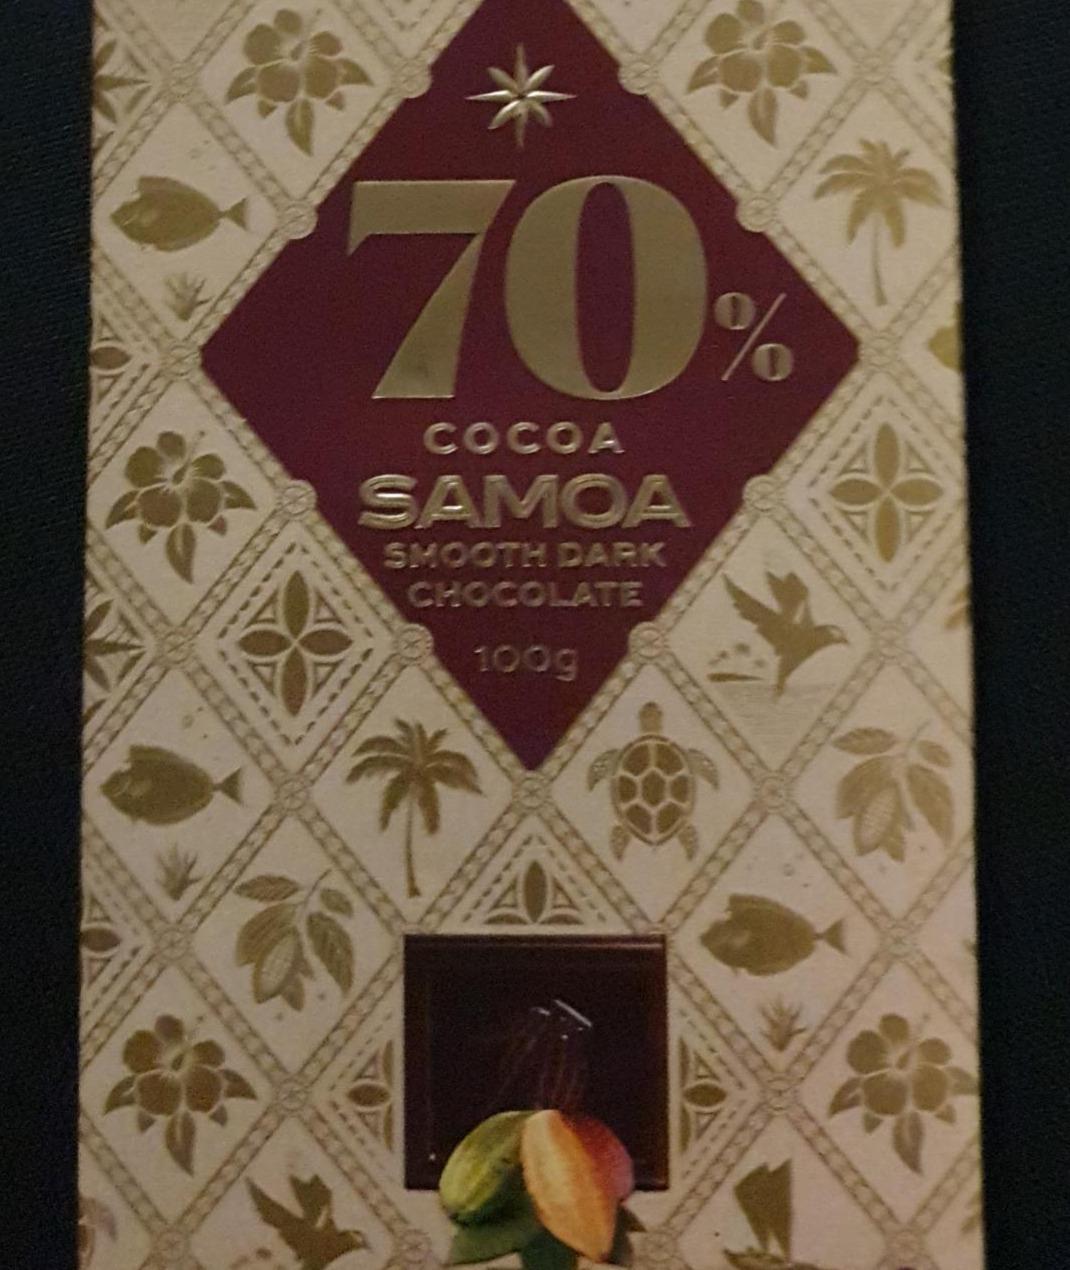 Fotografie - 70% Cocoa Samoa Smooth Dark Chocolate Whittaker's